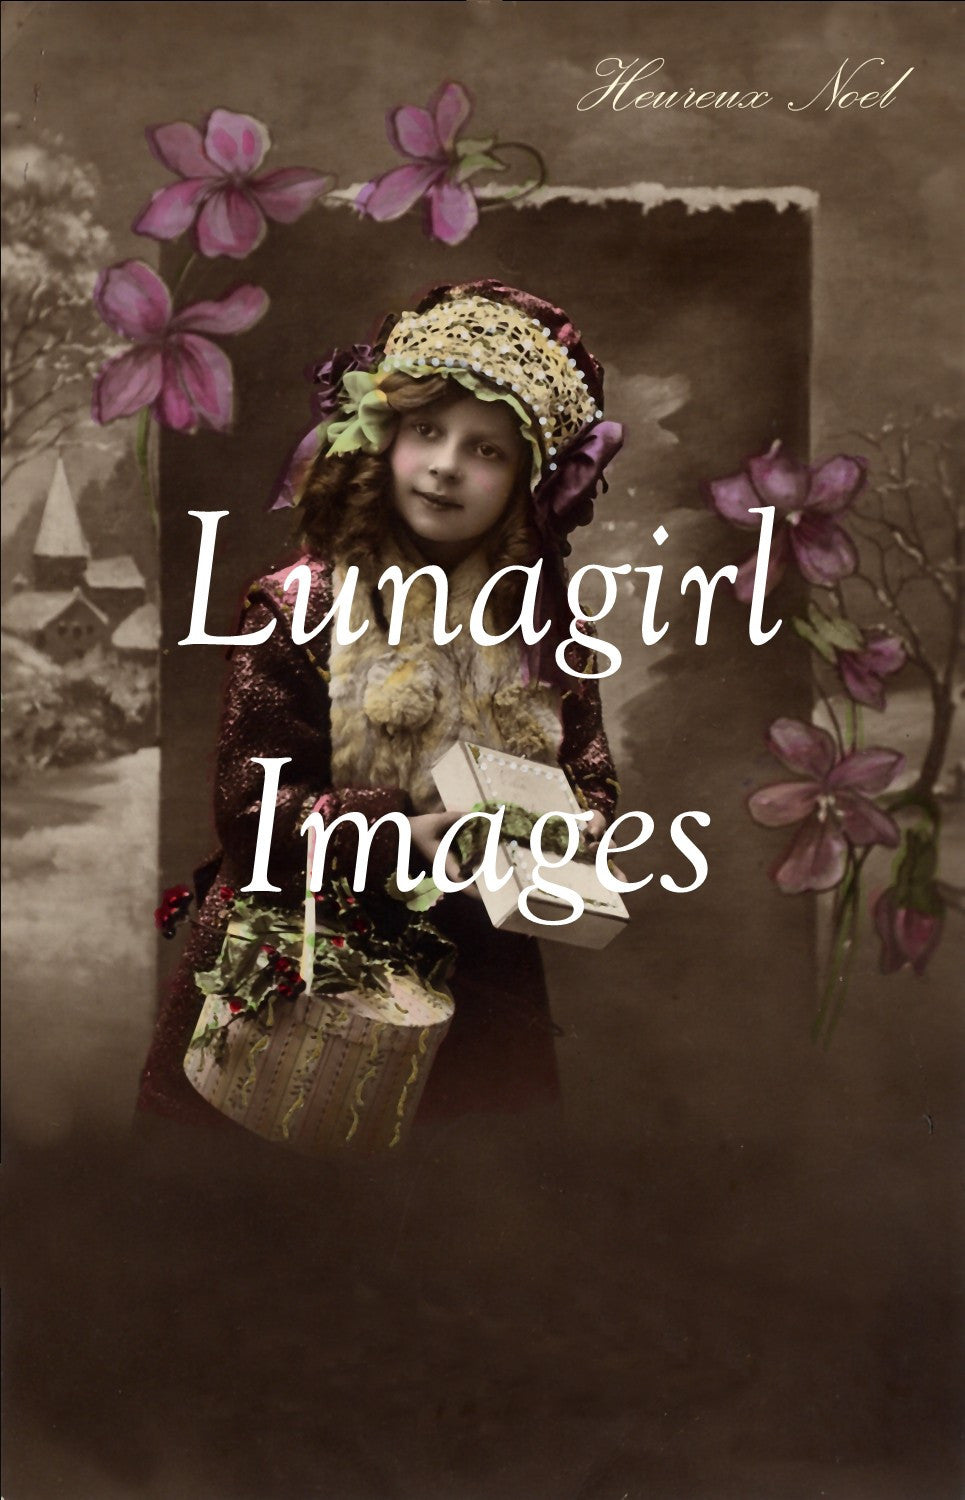 Christmas New Years Photos Postcards: 250 Images - Lunagirl